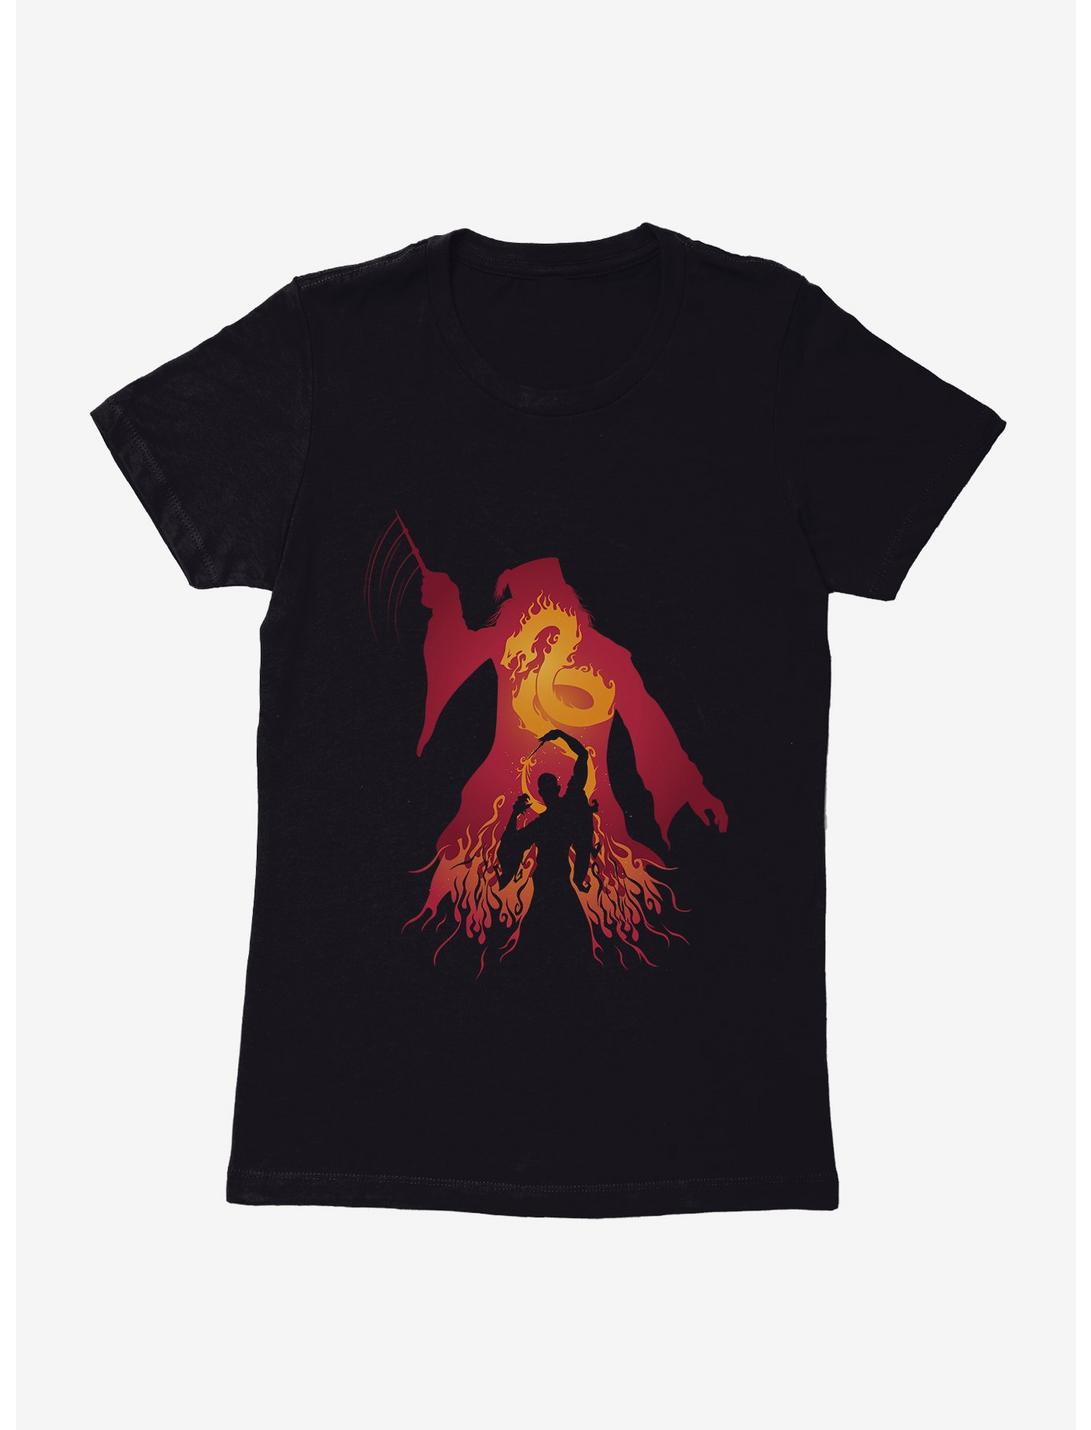 Harry Potter Dumbledore Fire Silhouette Womens T-Shirt, , hi-res